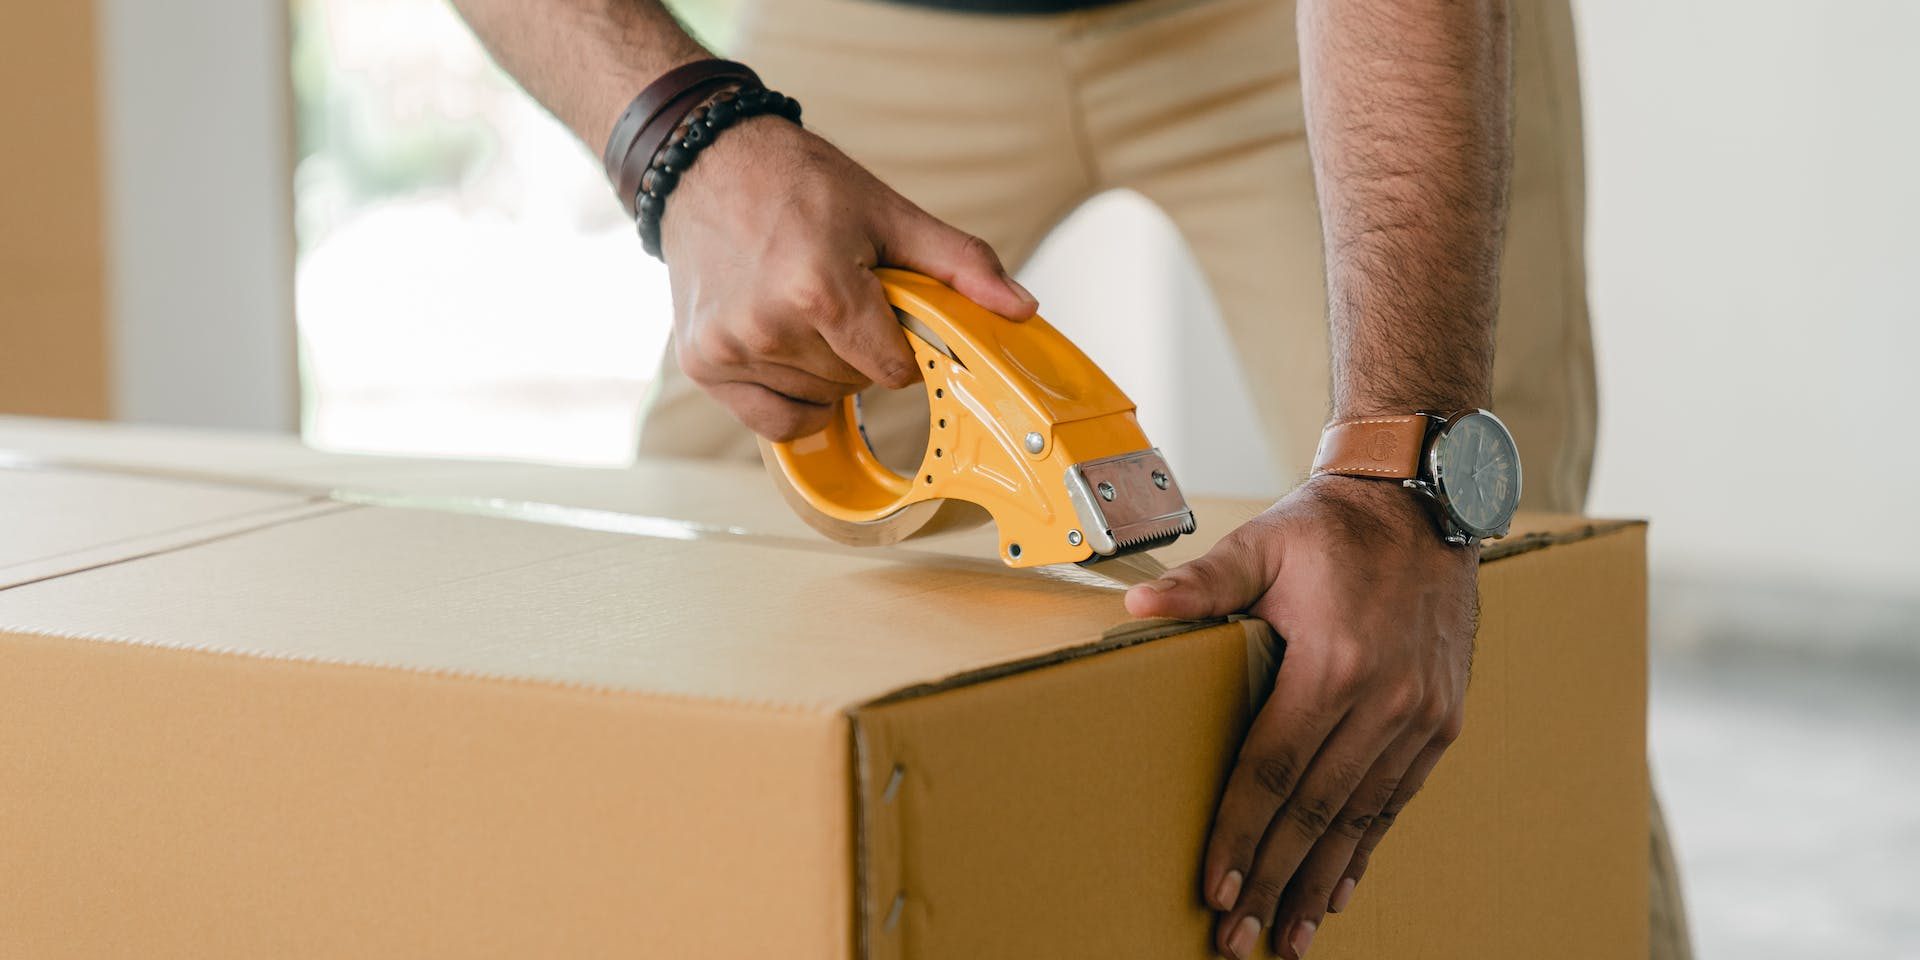 A man using a box cutter to open a cardboard box.